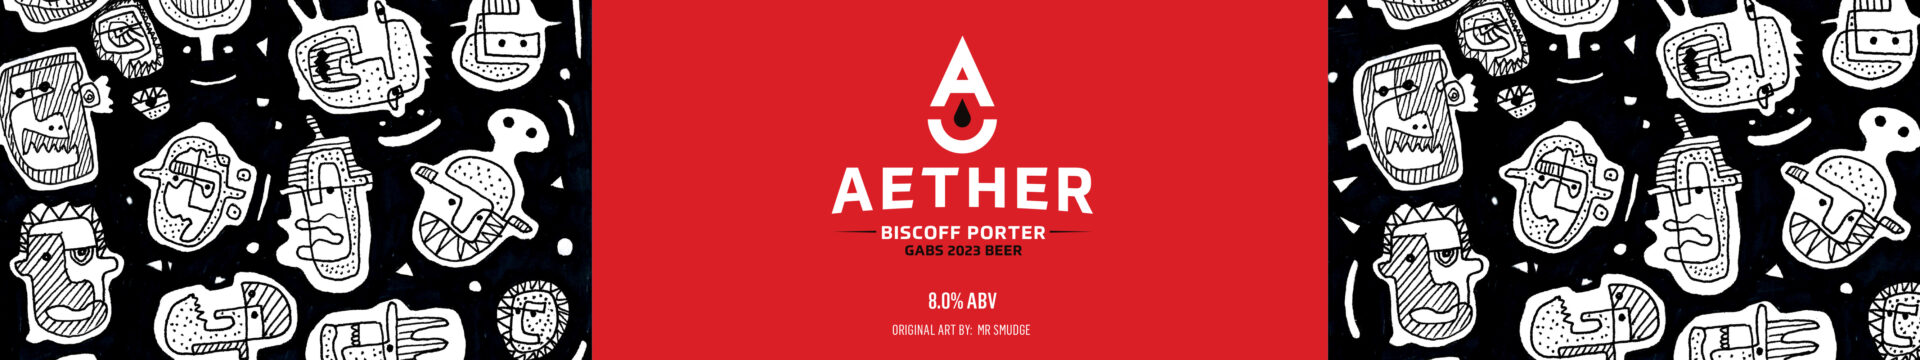 Aether_GABS 2023 BEER Biscoff Porter Banner